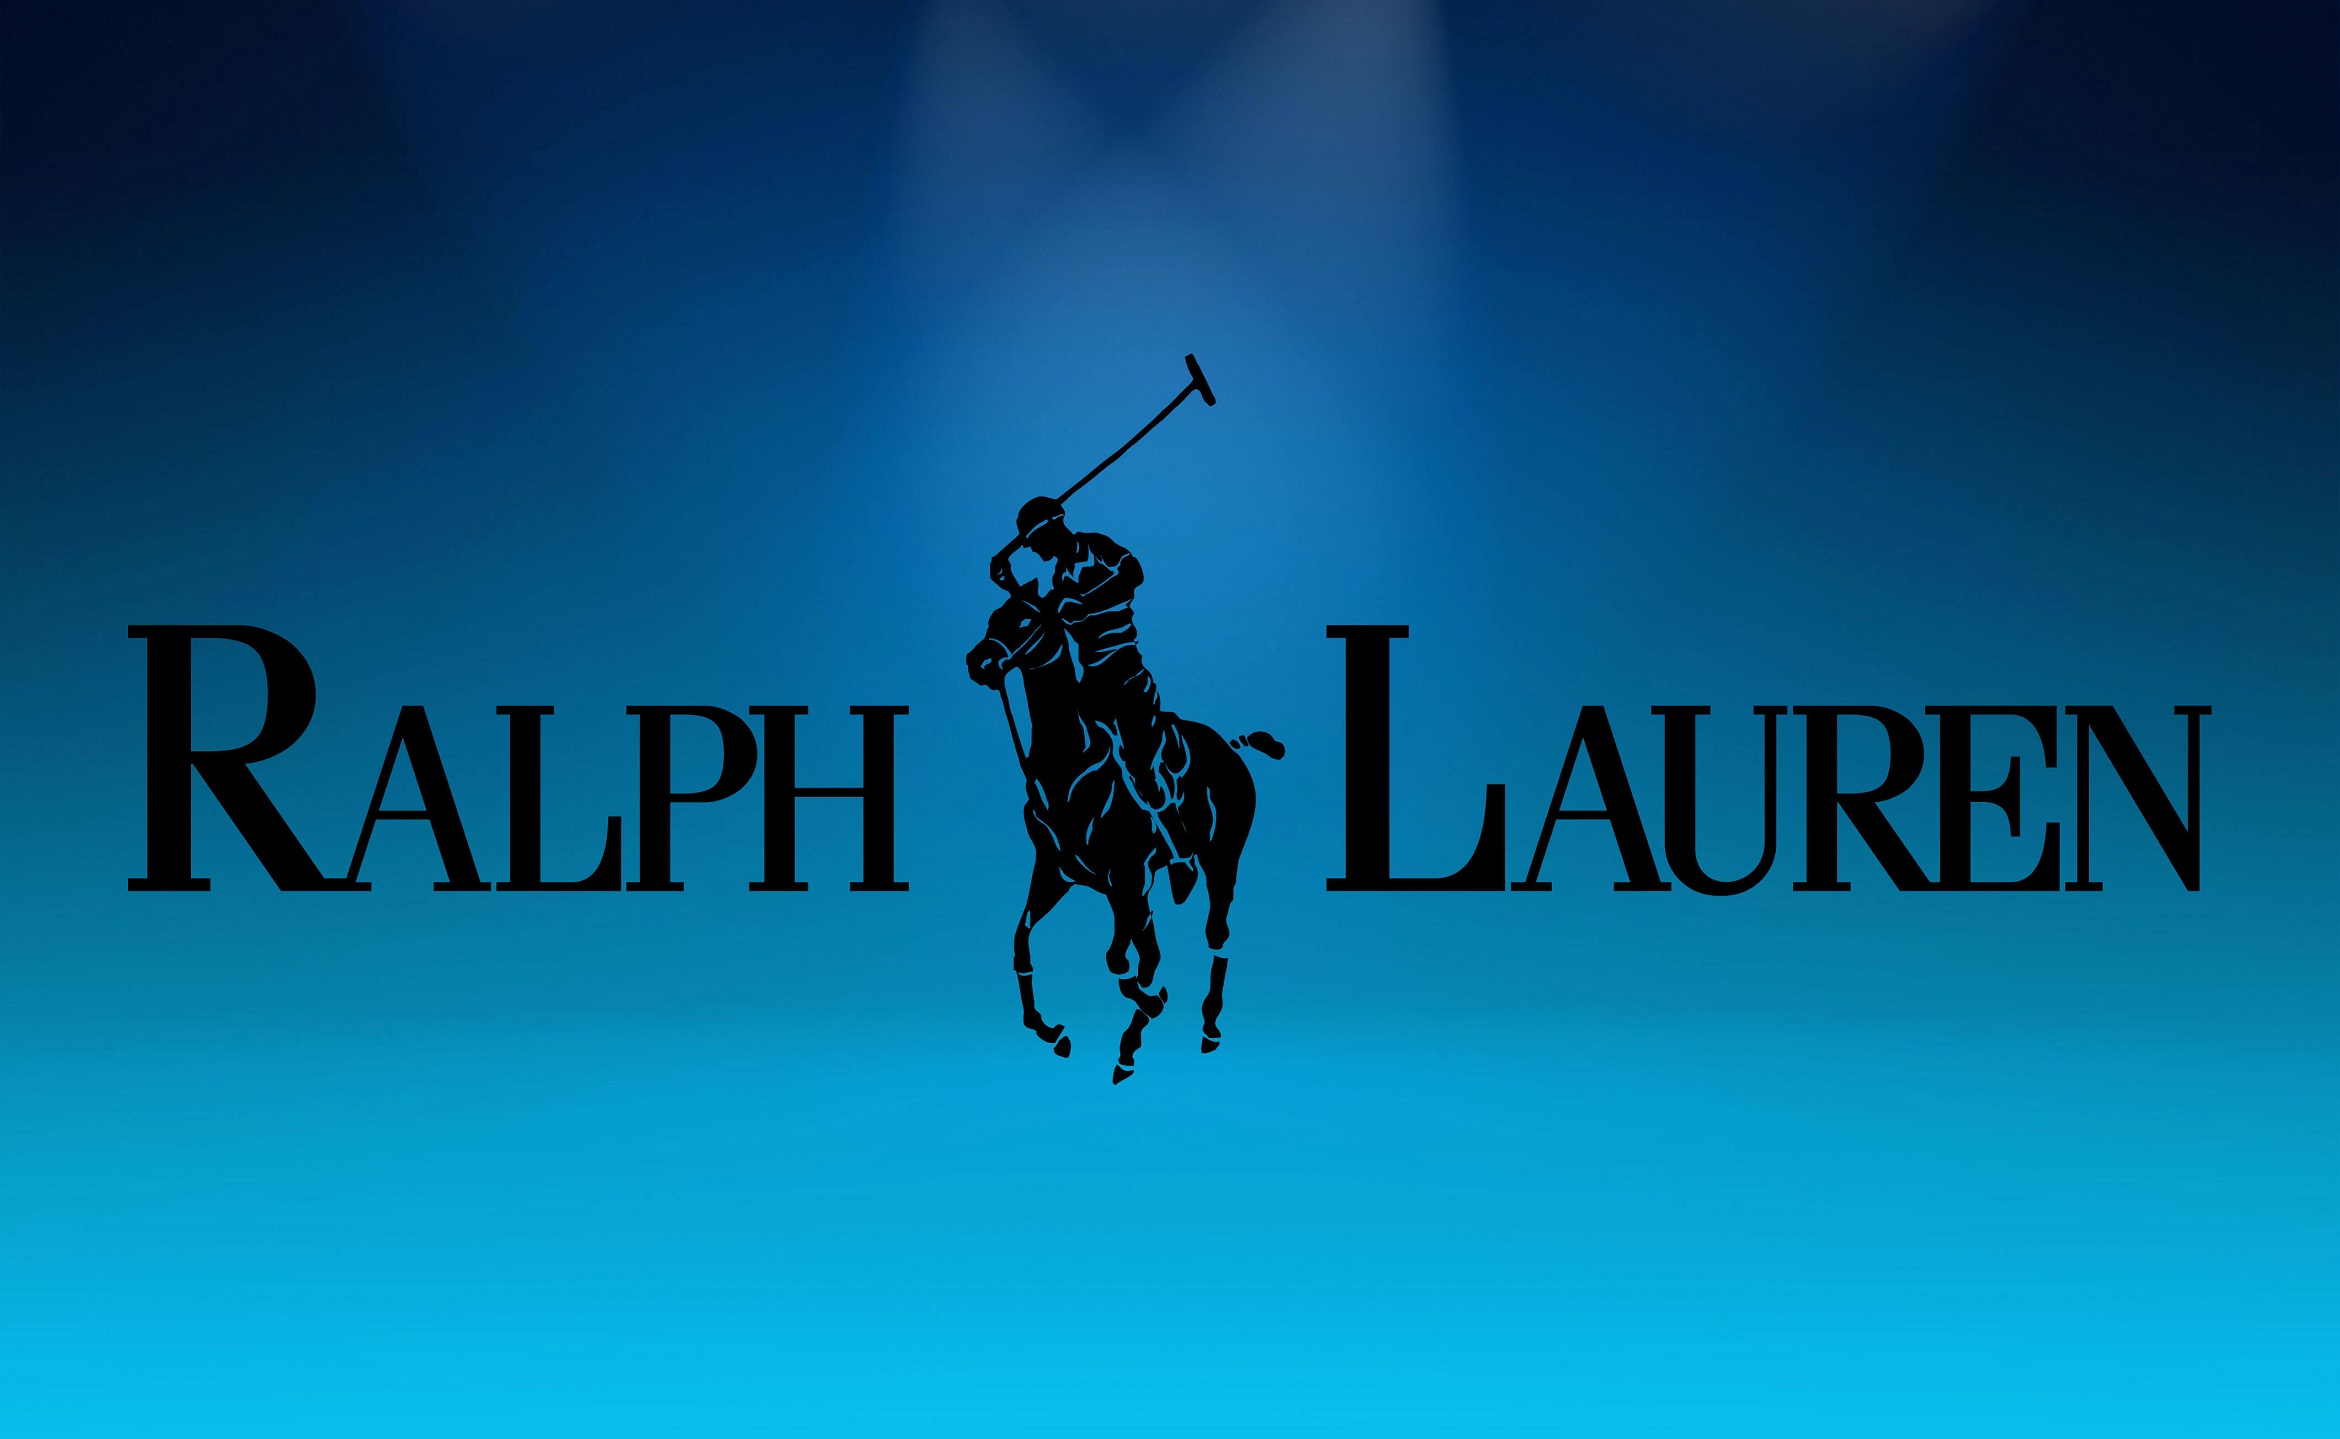 Polo Ralph Lauren Logo Wallpapers